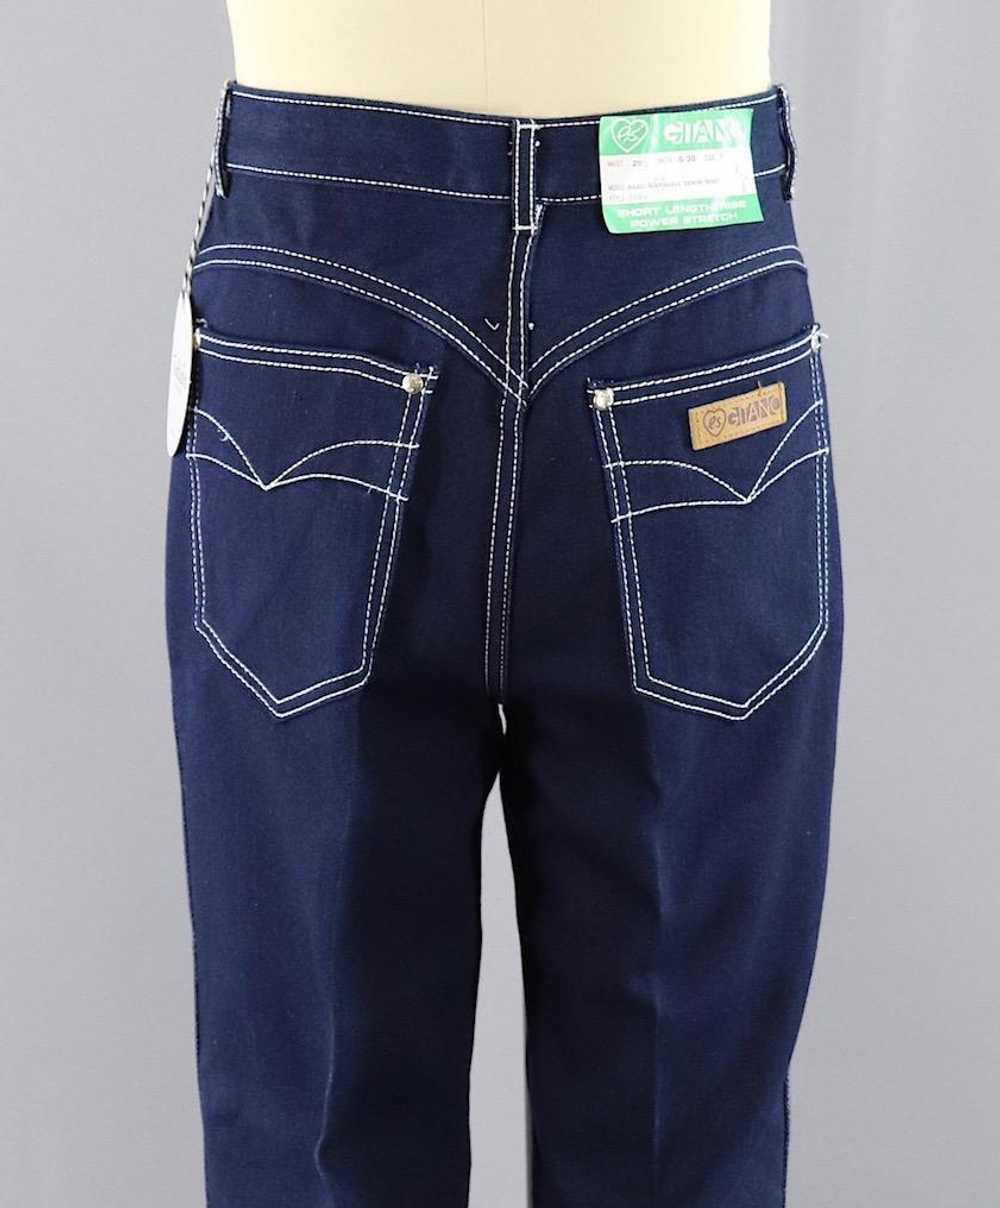 Vintage 1980s Gitano Jeans with Original Tags - image 2